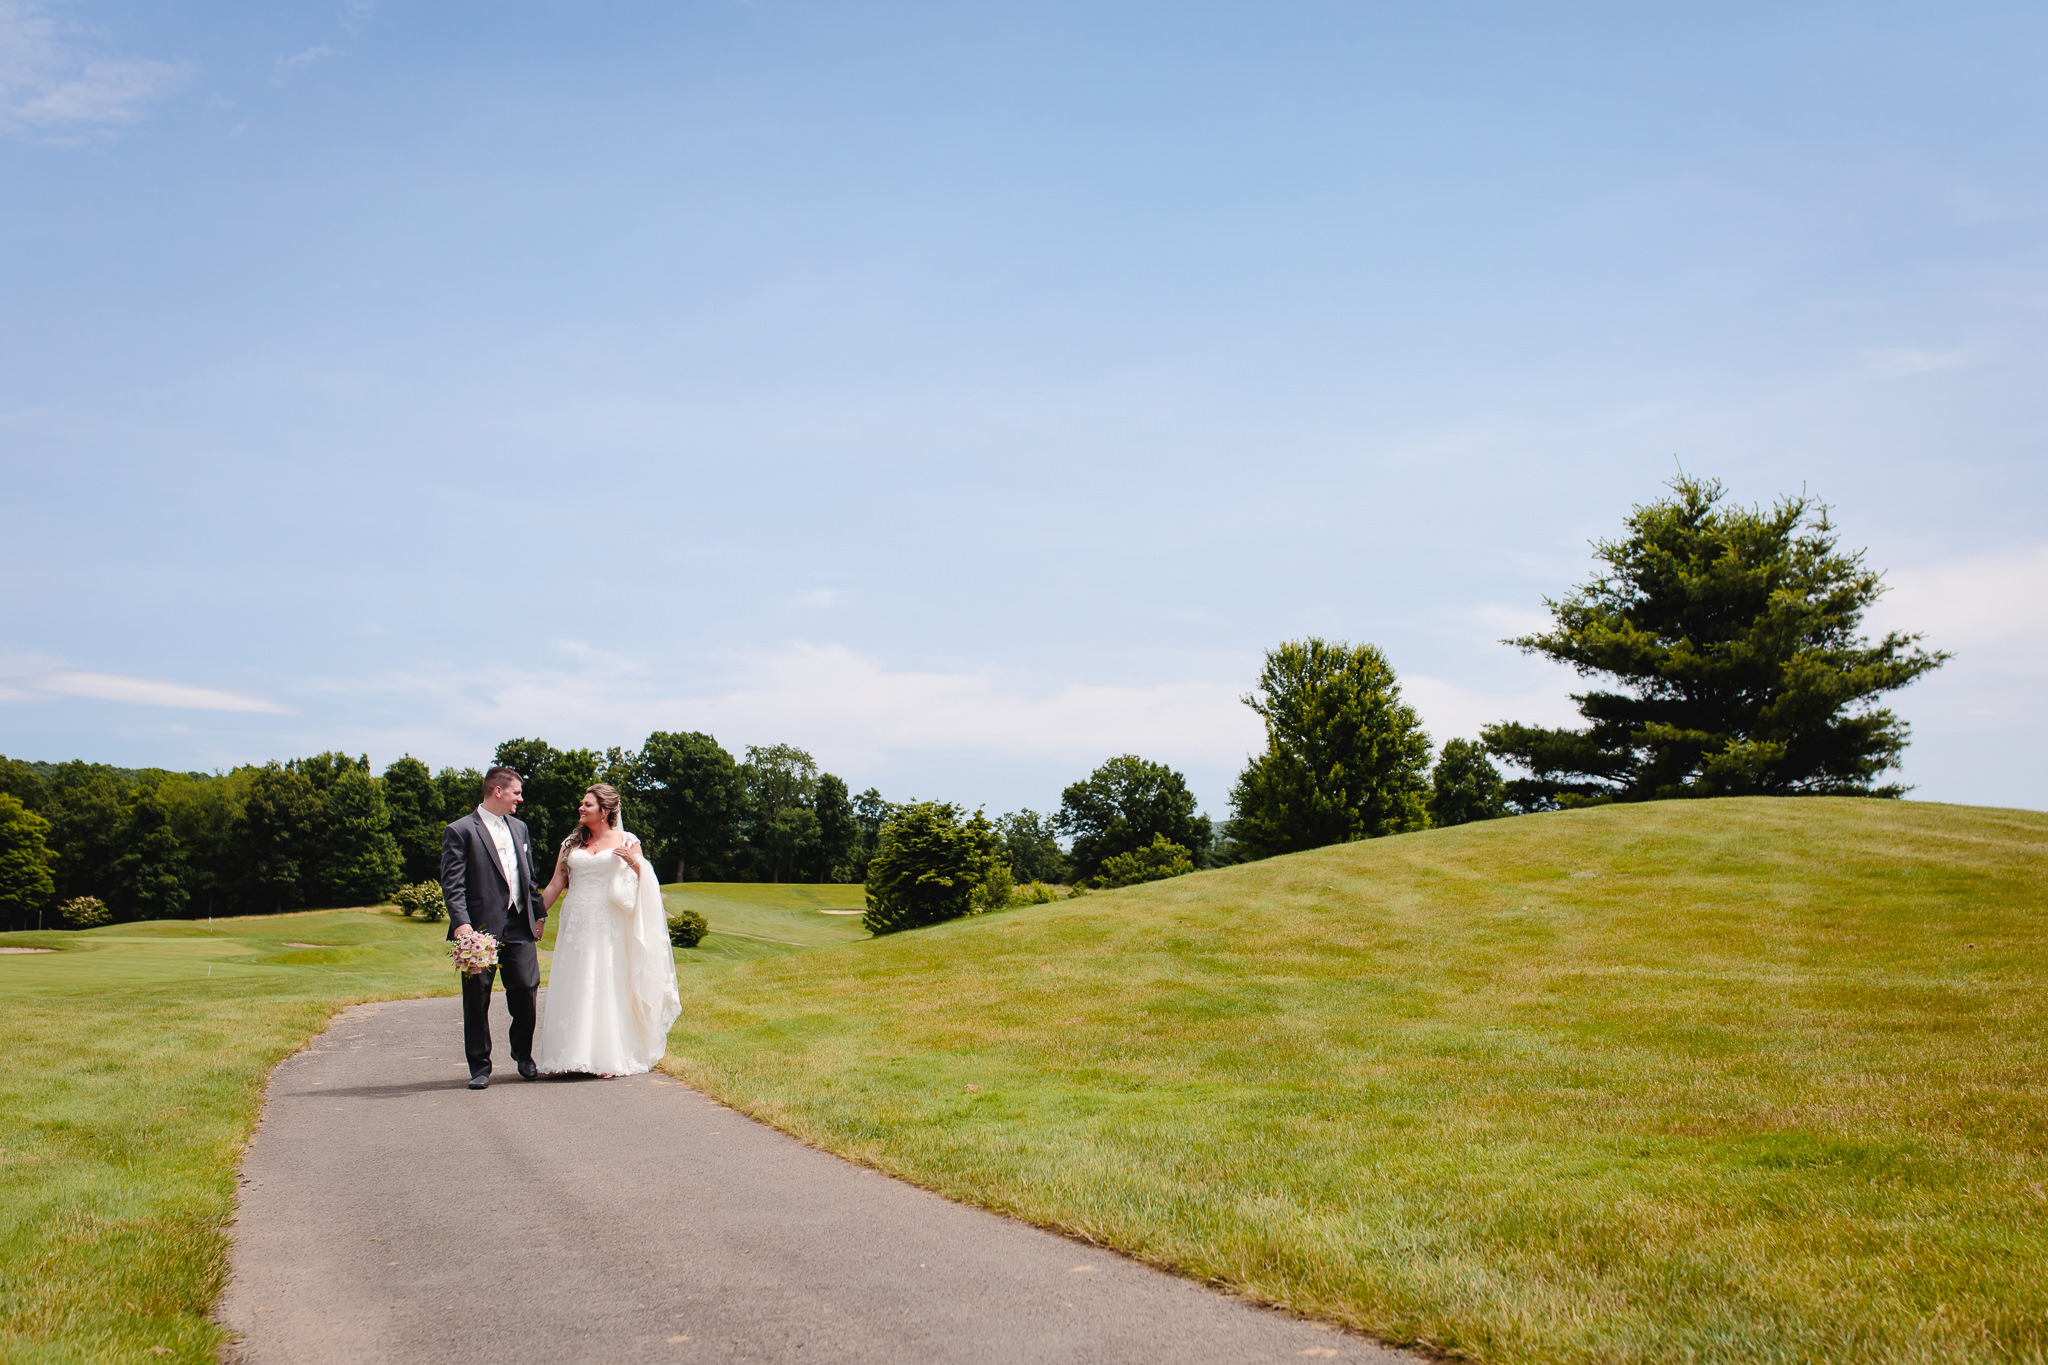 Bride & groom walk together at Chestnut Ridge Golf Resort